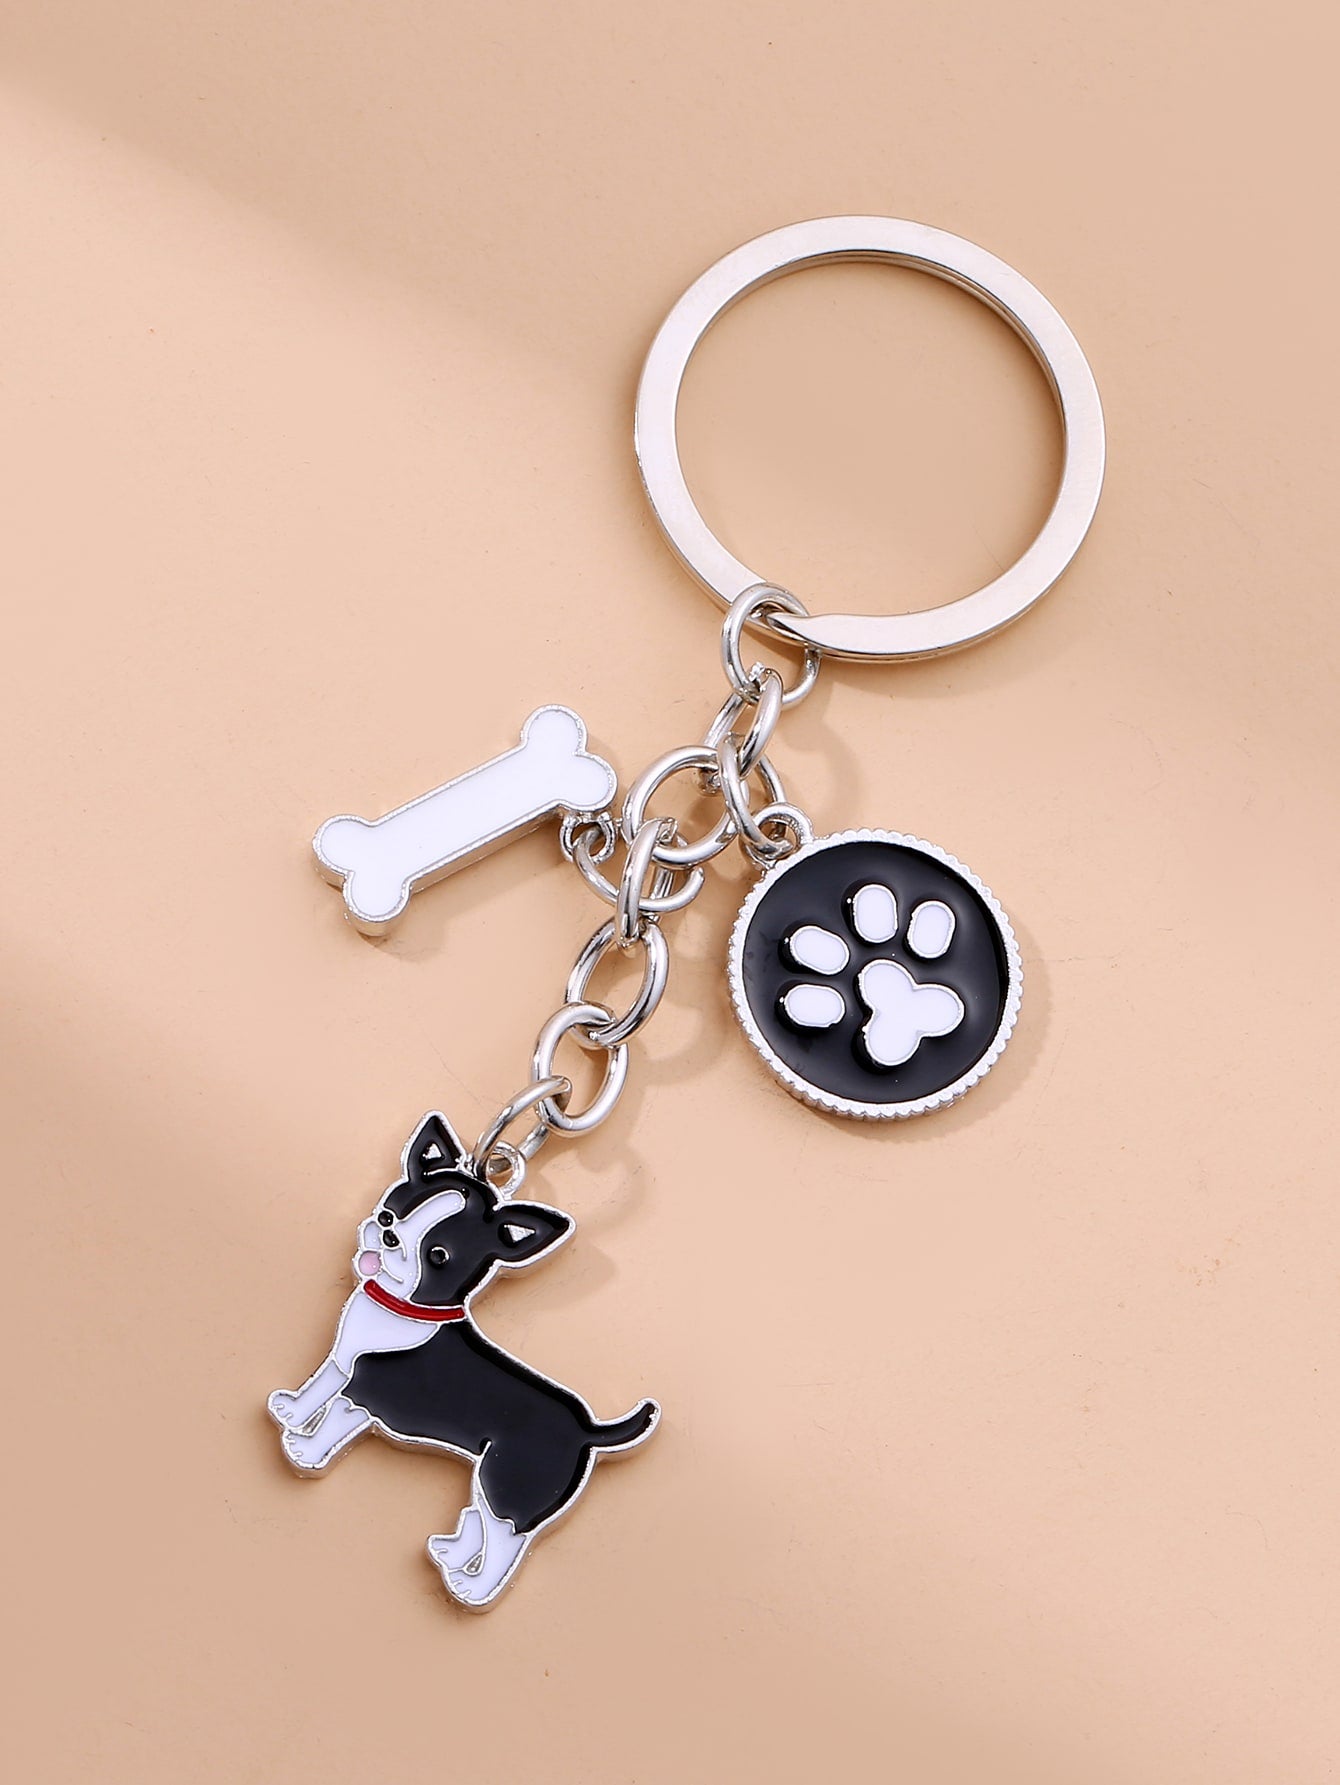 Paw Detail Round & Dog Charm Keychain Accessories Pendant Ke